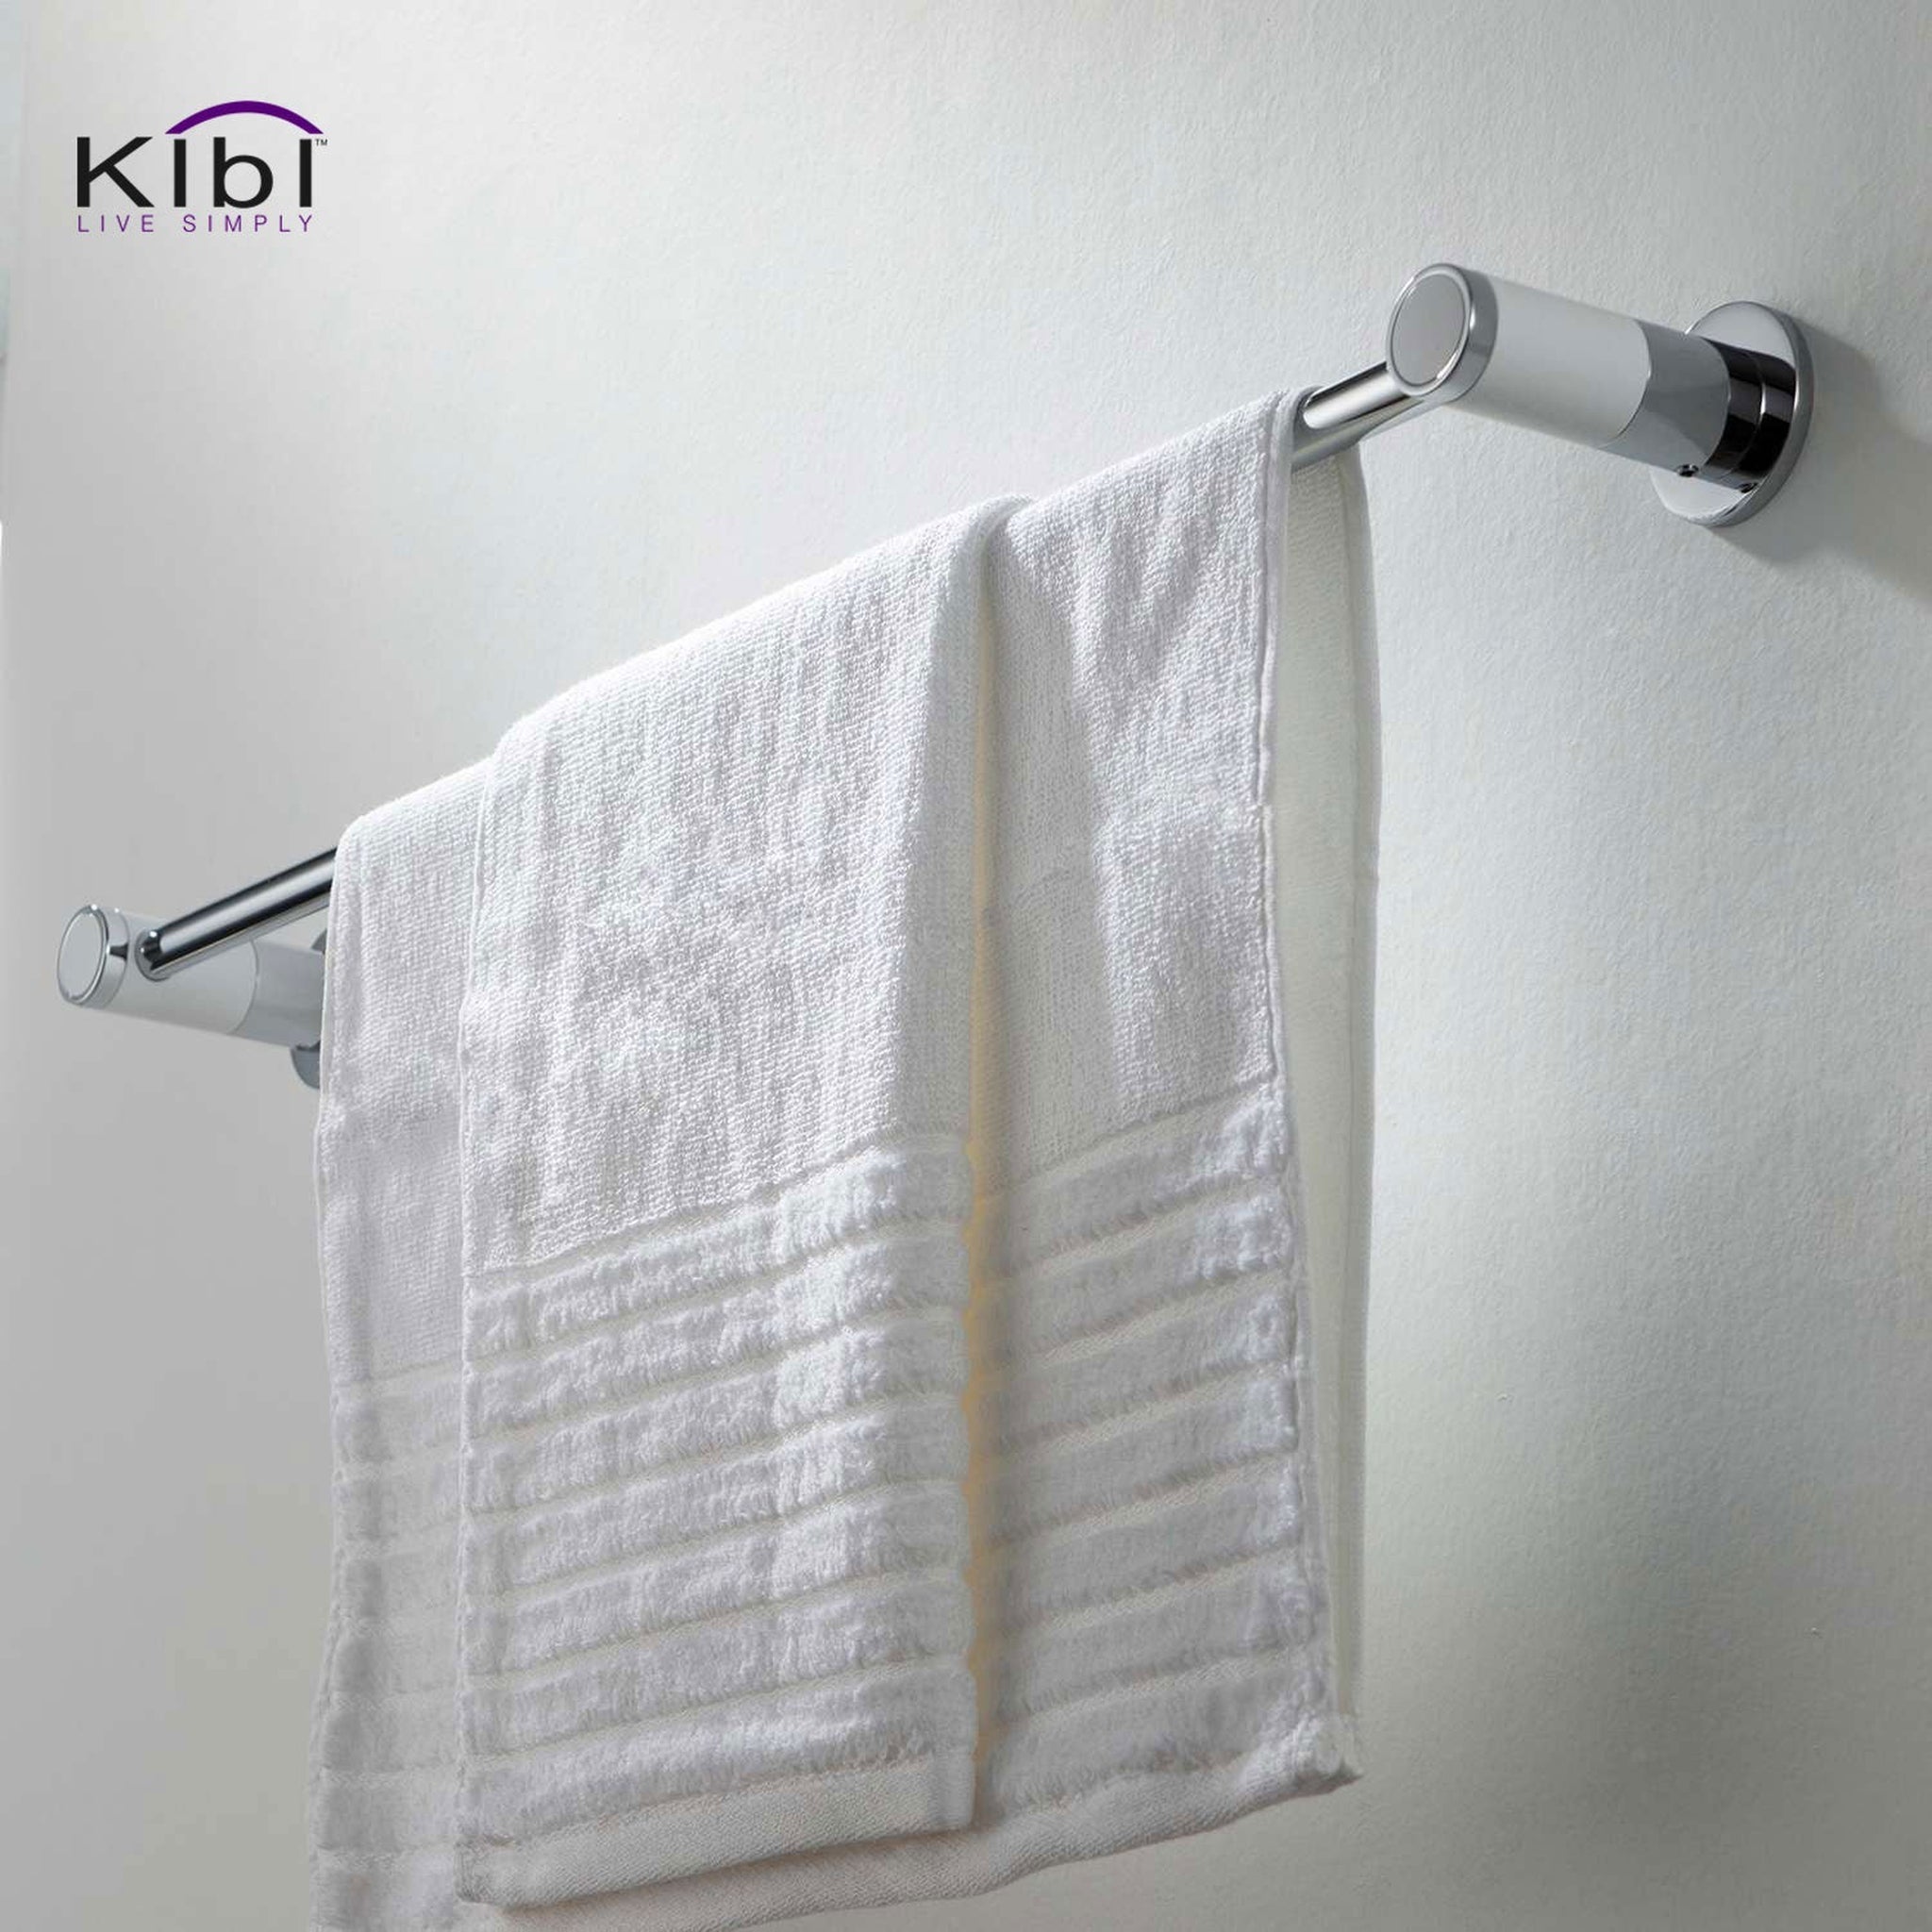 KIBI, KIBI Abaco Bathroom Towel Bar in Chrome White Finish